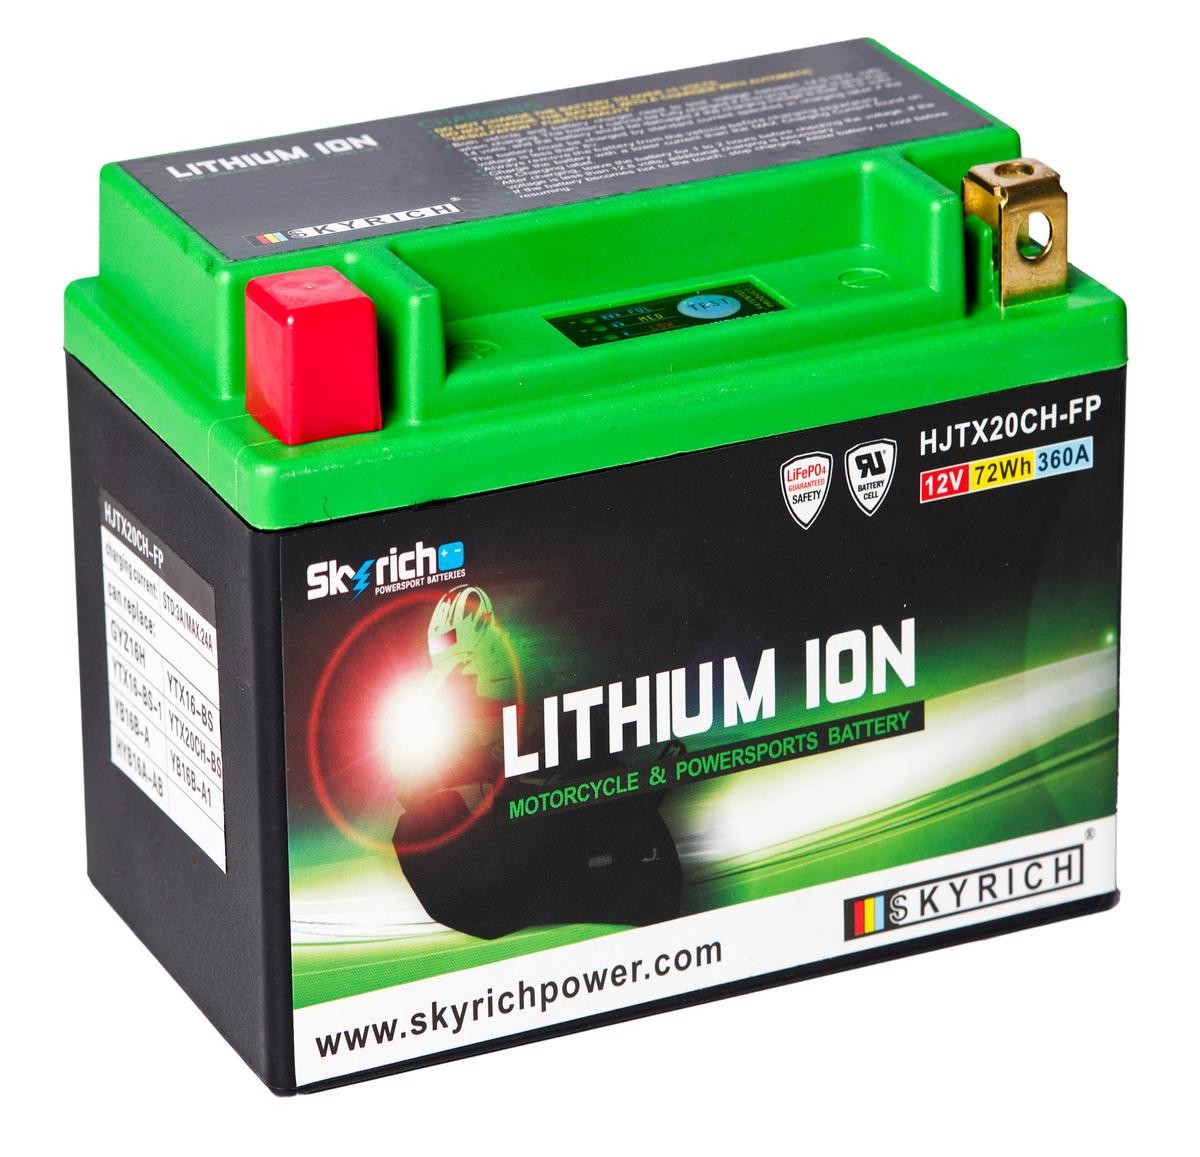 SUZUKI VS Batterie 12V 6Ah 360A N Li-Ionen-Batterie SKYRICH LITHIUM ION HJTX20CH-FP